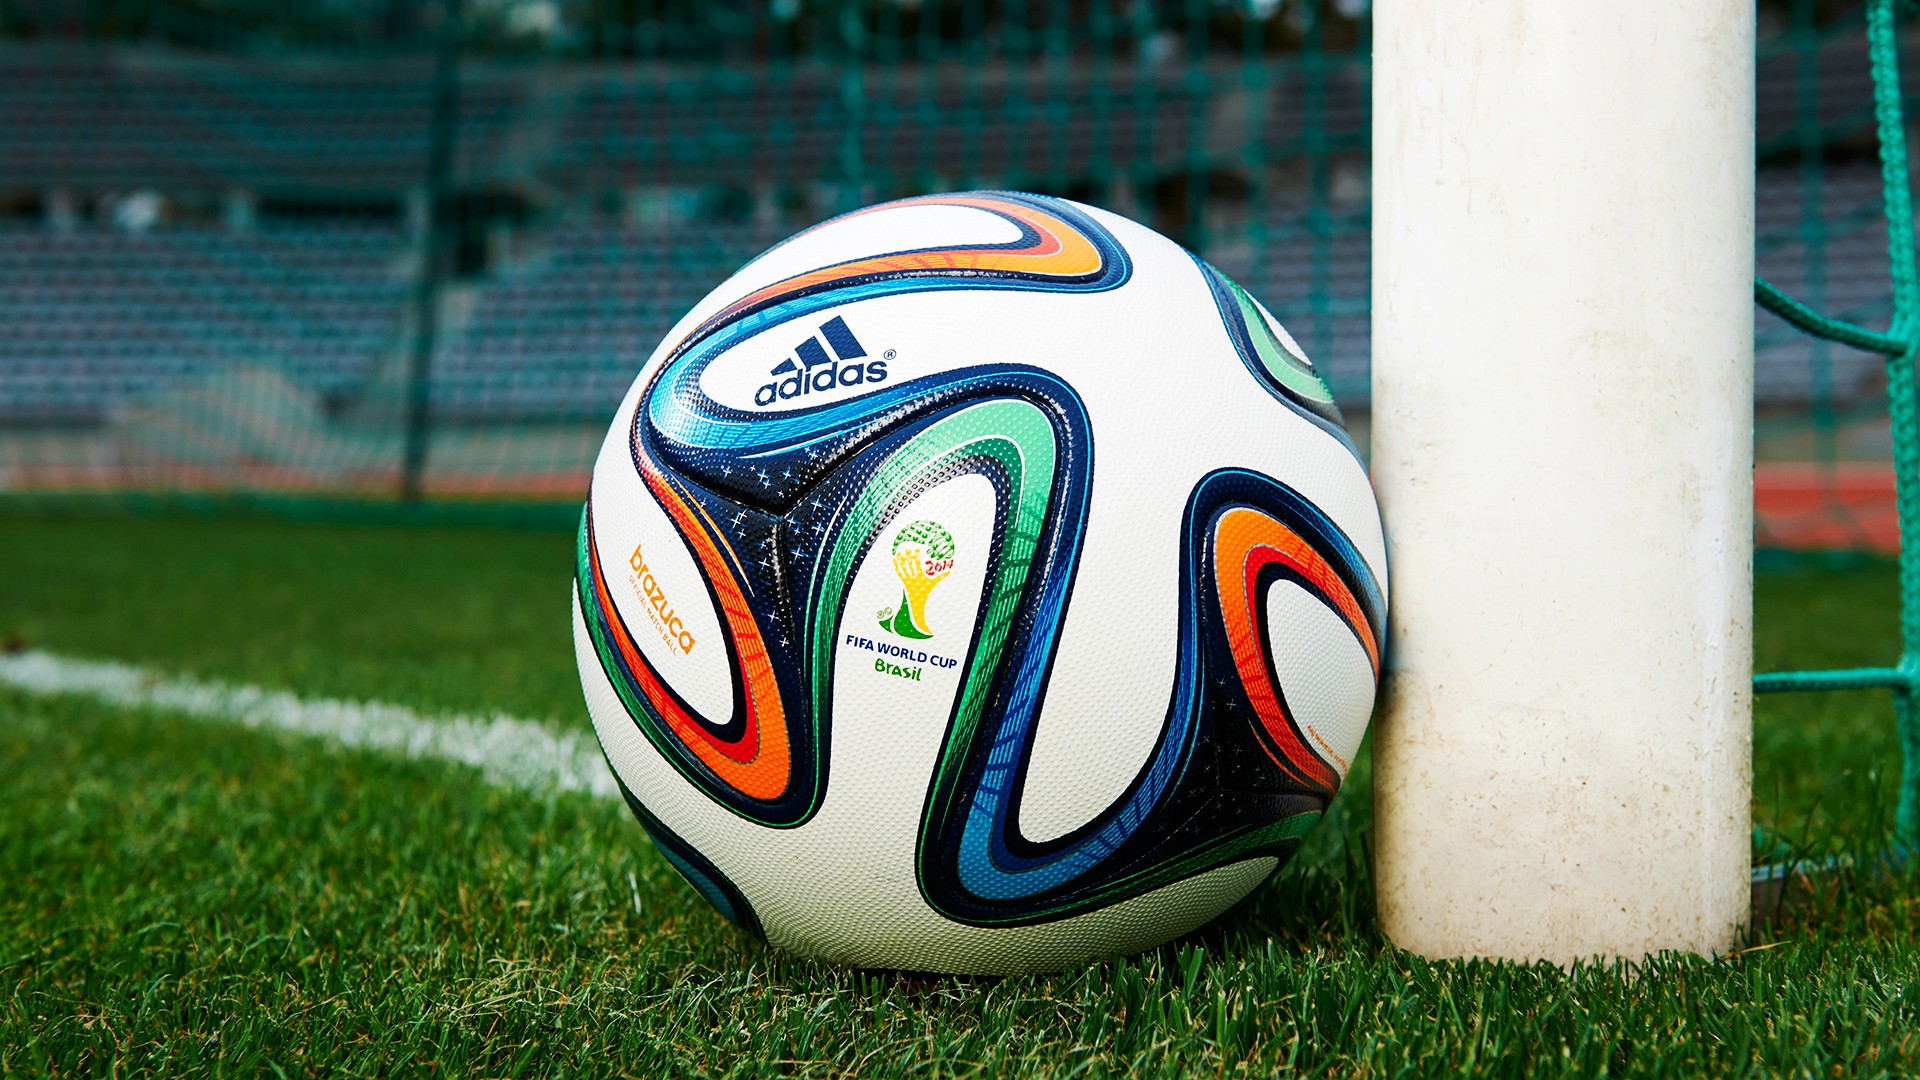 papier peint coupe du monde,ballon de football,football,herbe,équipement sportif,pallone